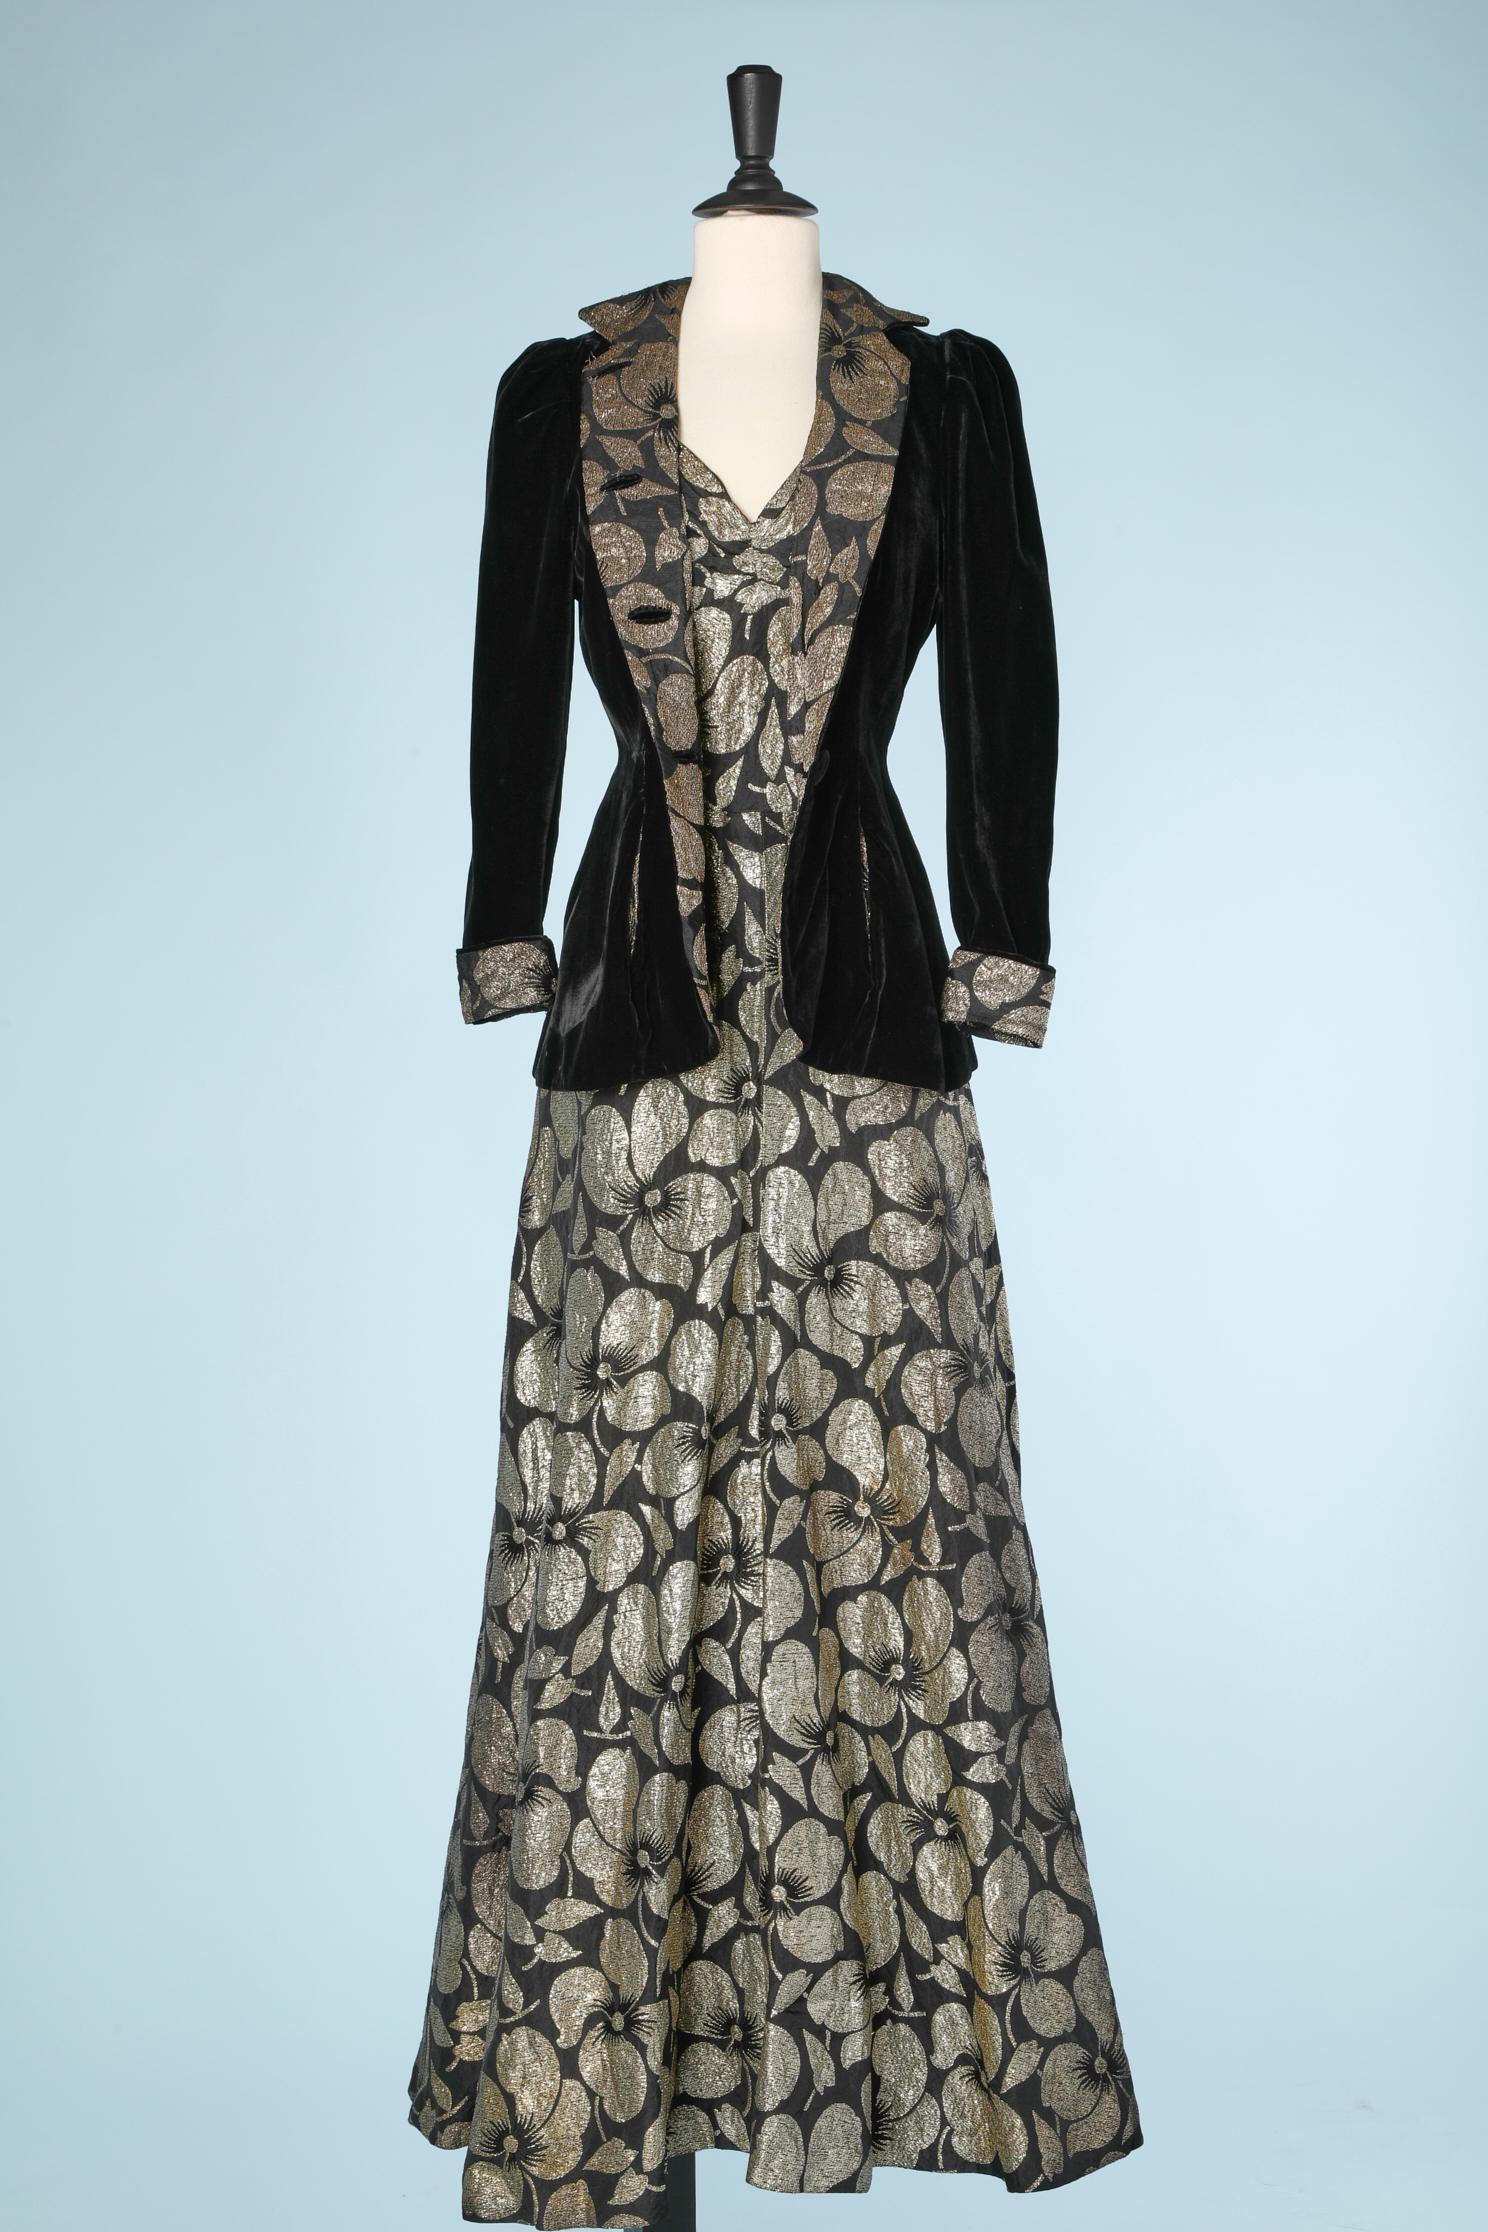 Black Evening long skirt-suit in black velvet and gold lurex brocade dress For Sale